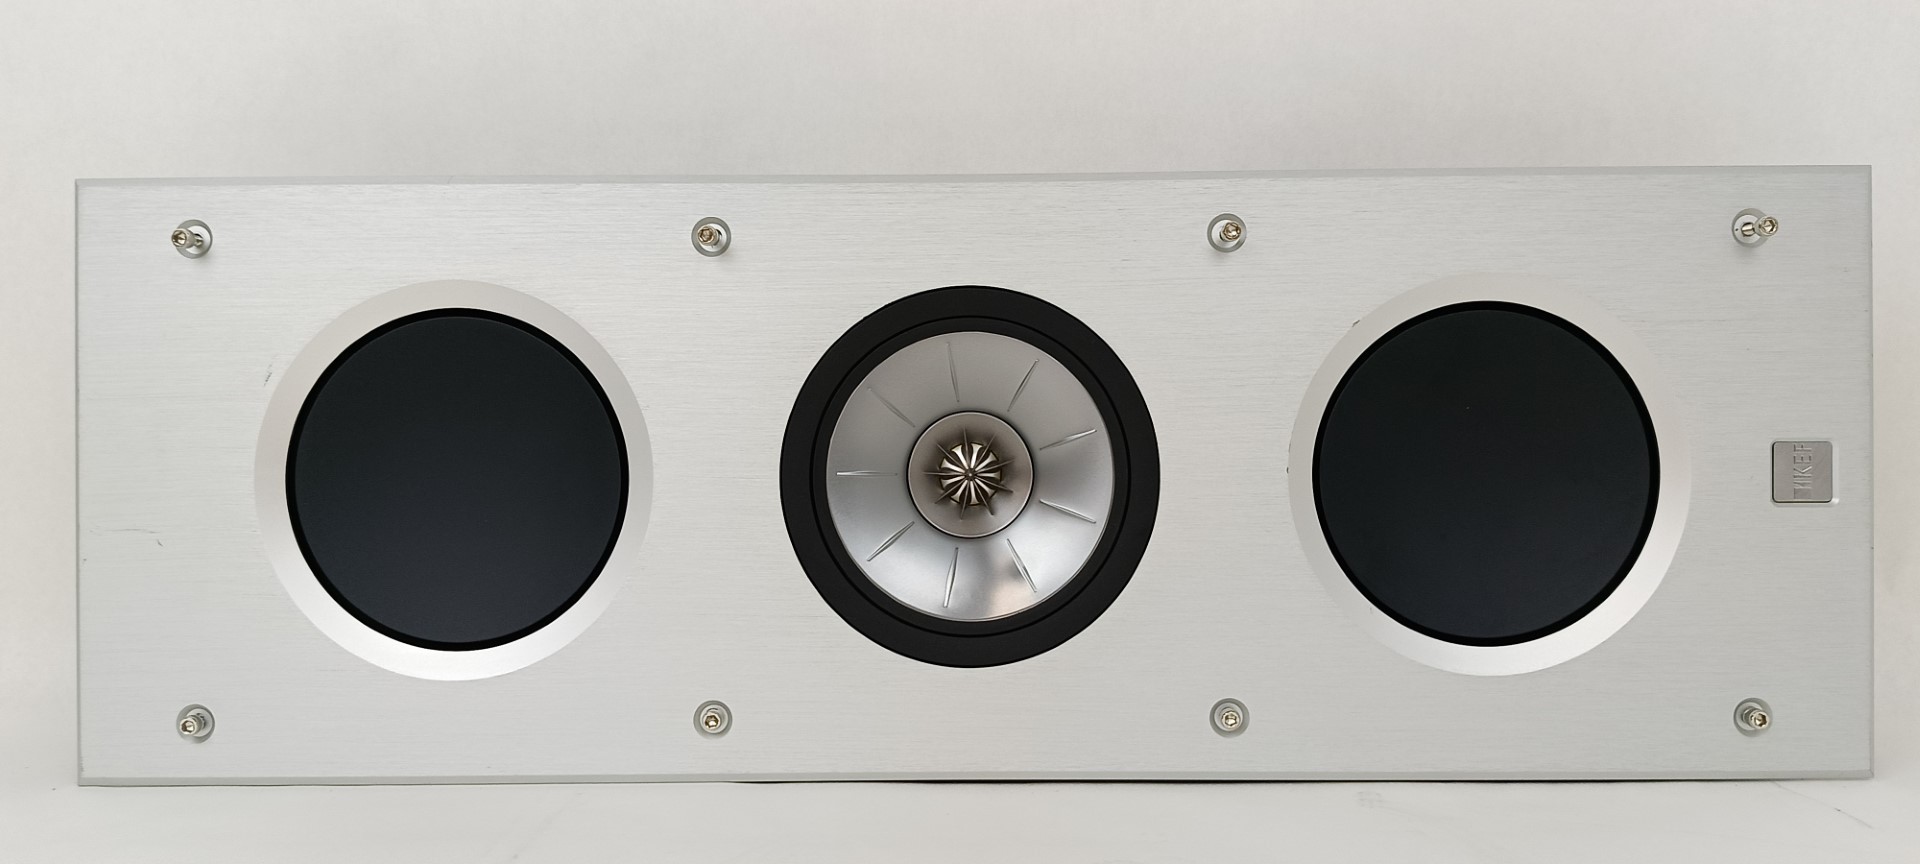 KEF CI3160RL THX Dual 6.5" Passive 3-Way In-Wall Speaker (Each) - No Grille -191